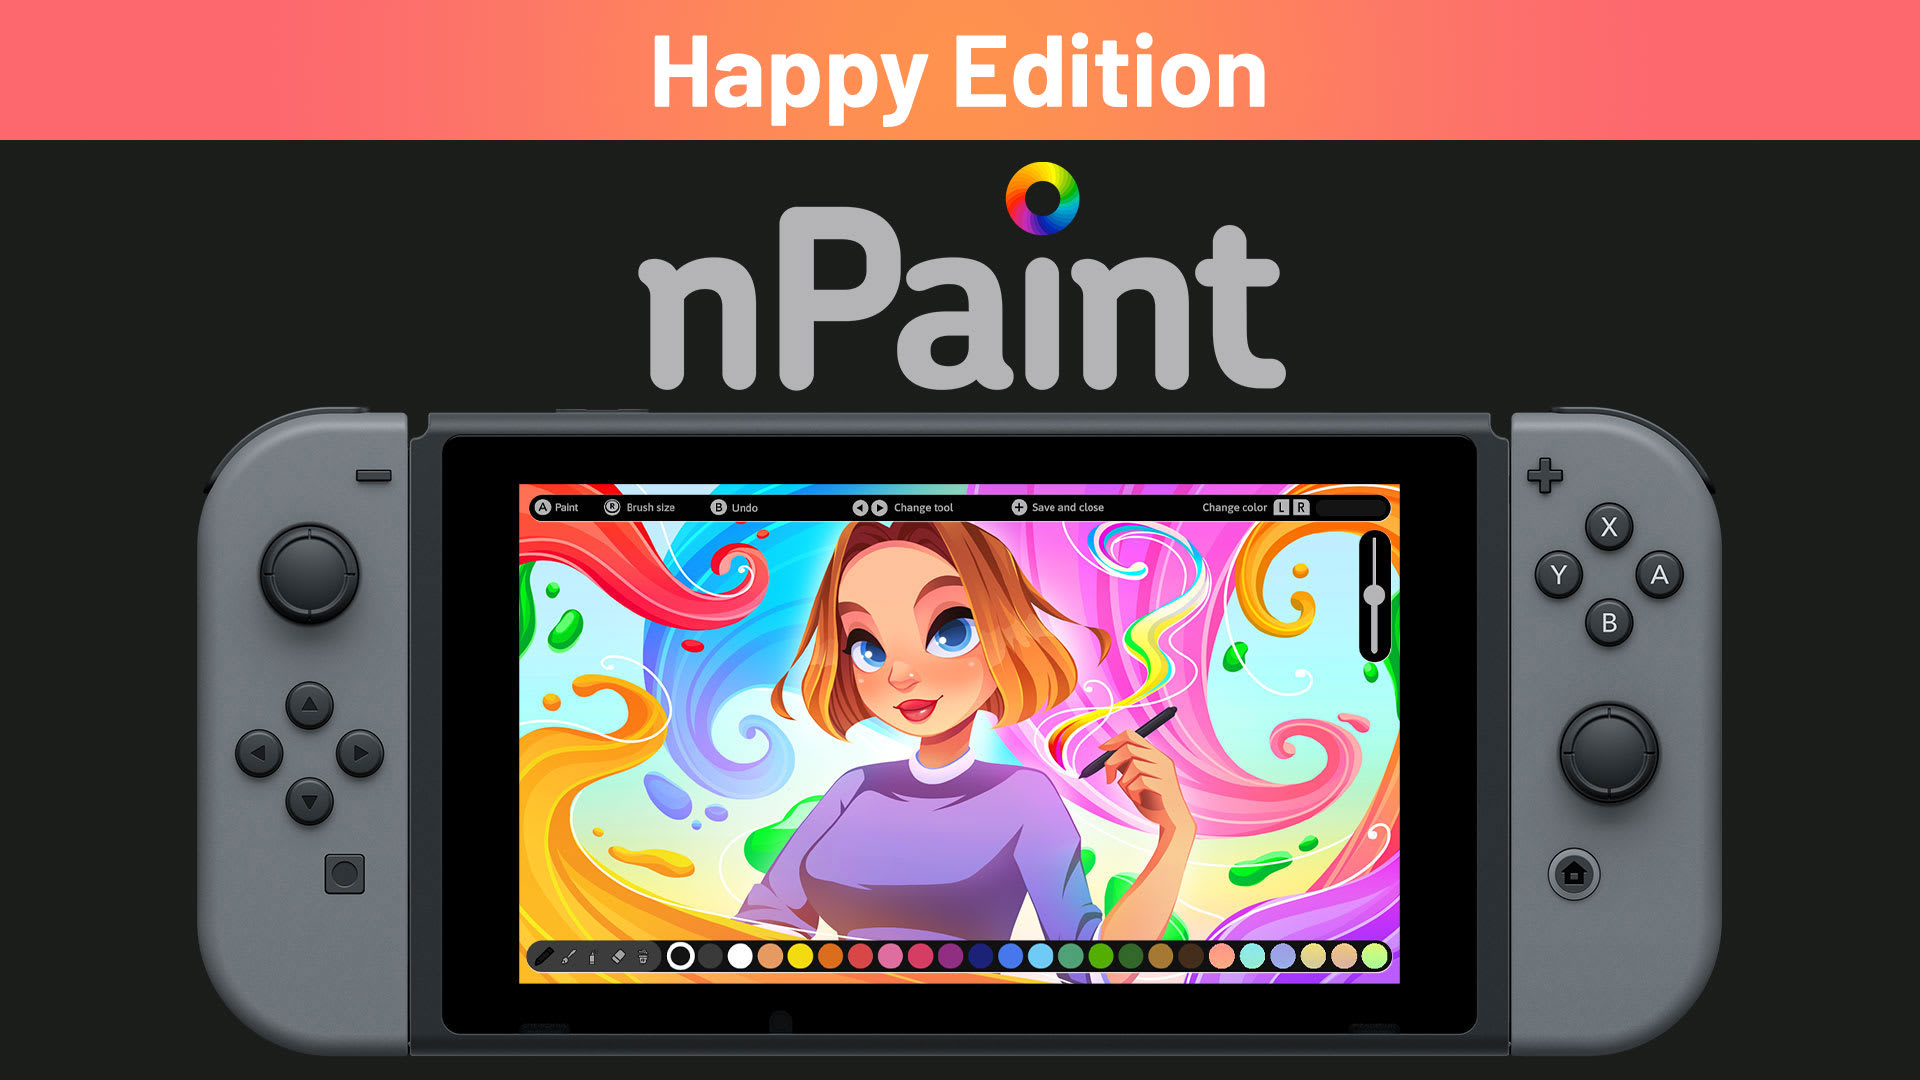 nPaint Happy Edition